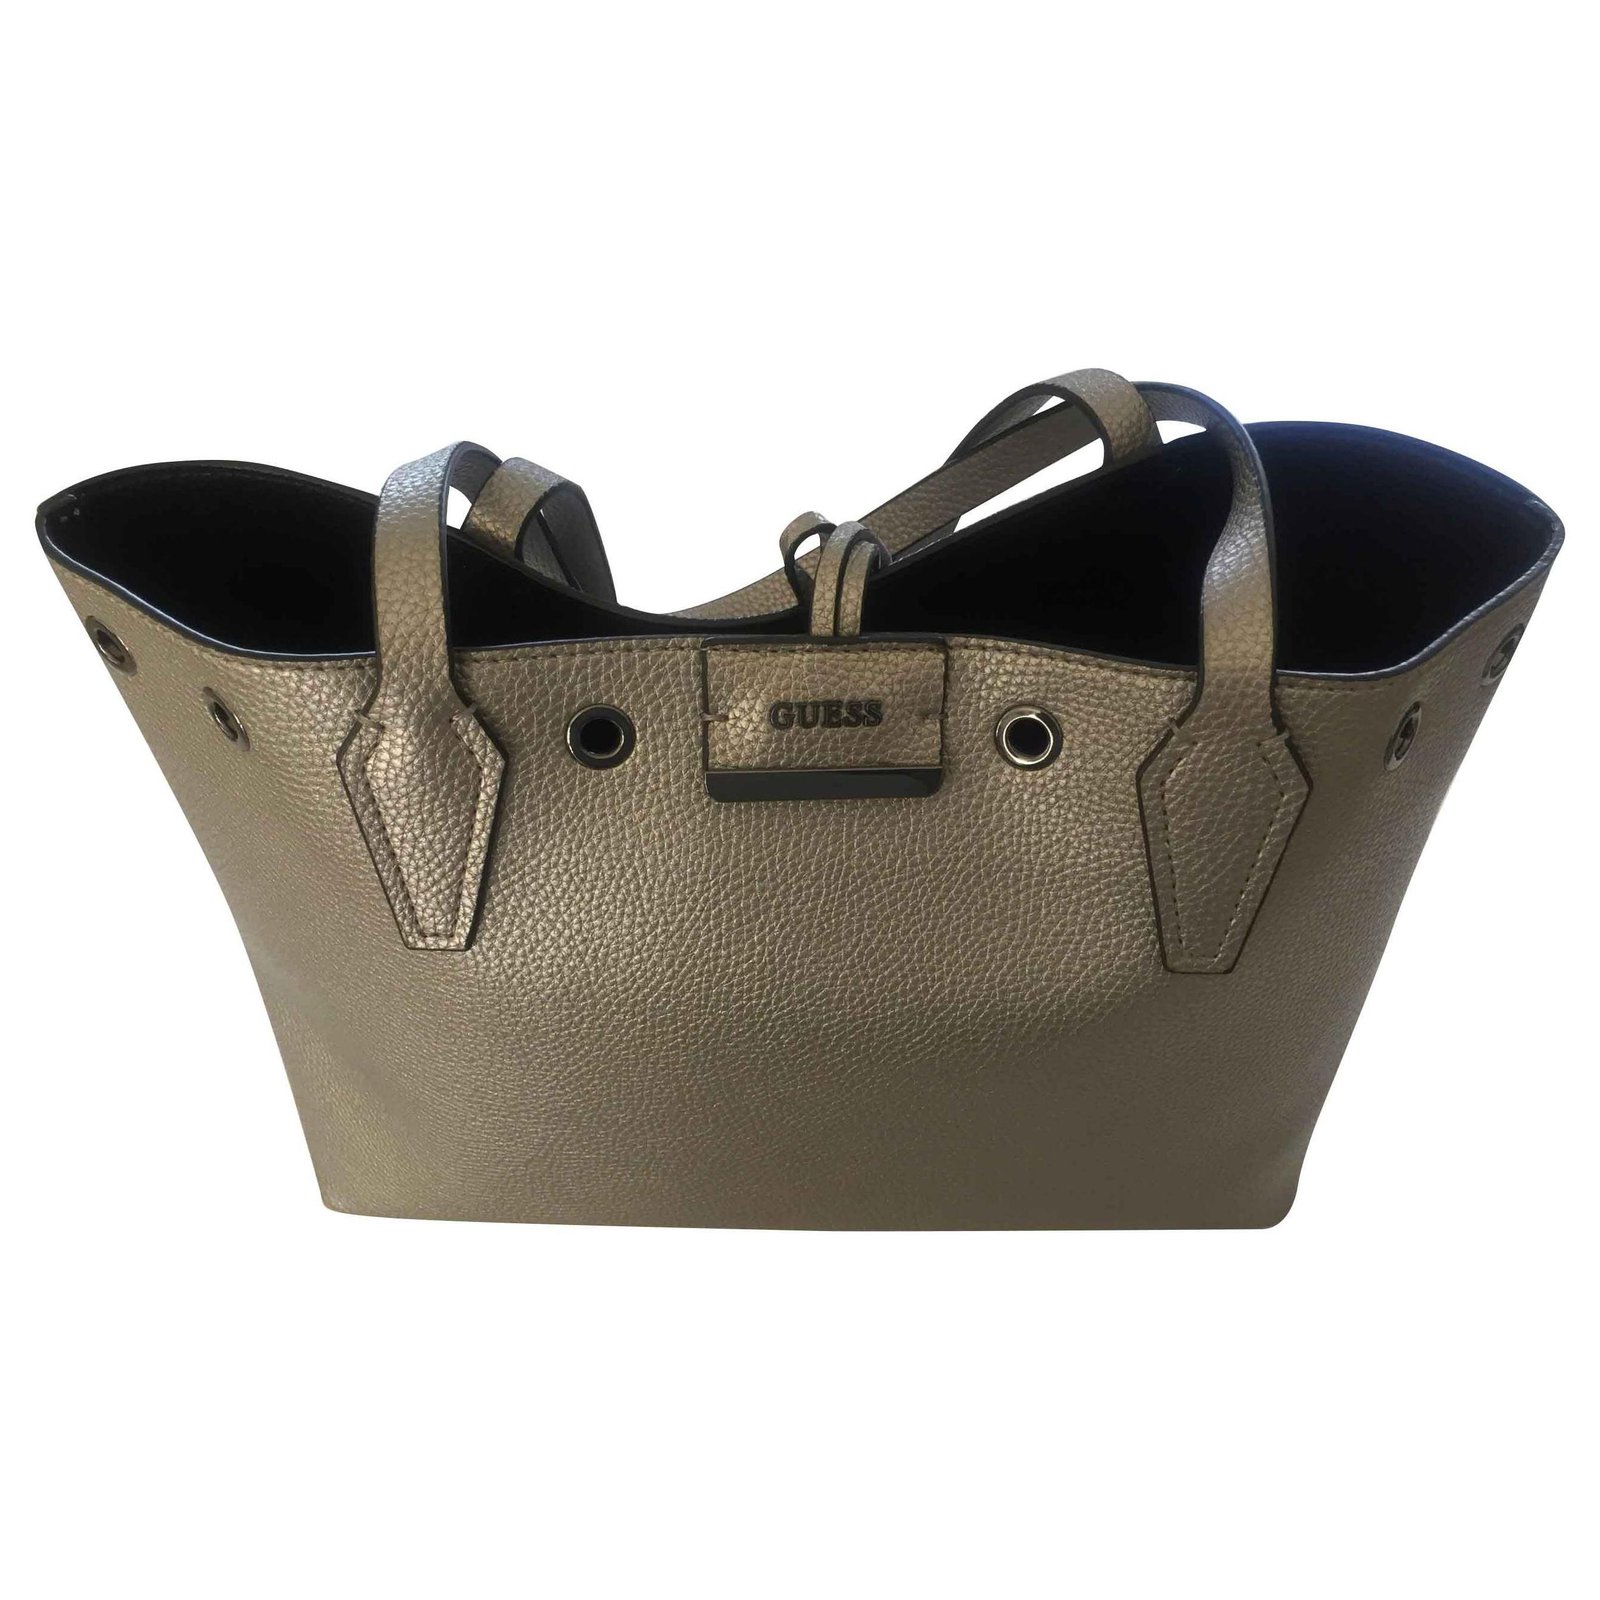 PU Leather Plain Guess Handbags at Rs 750/bag in Mumbai | ID: 23470809797